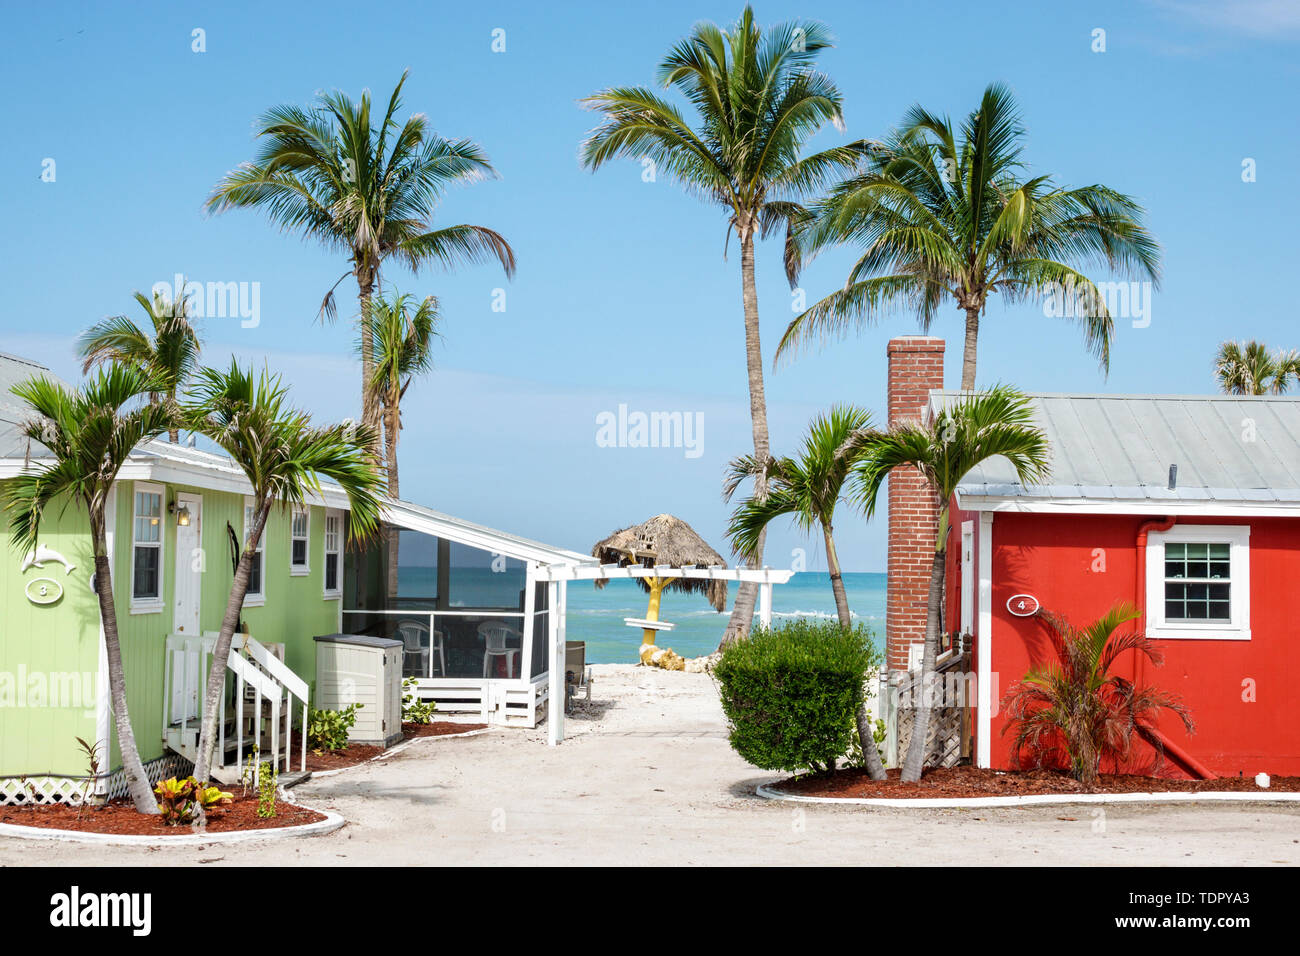 Sanibel Island Florida Castaways Beach Bay Cottages Resort Hotel